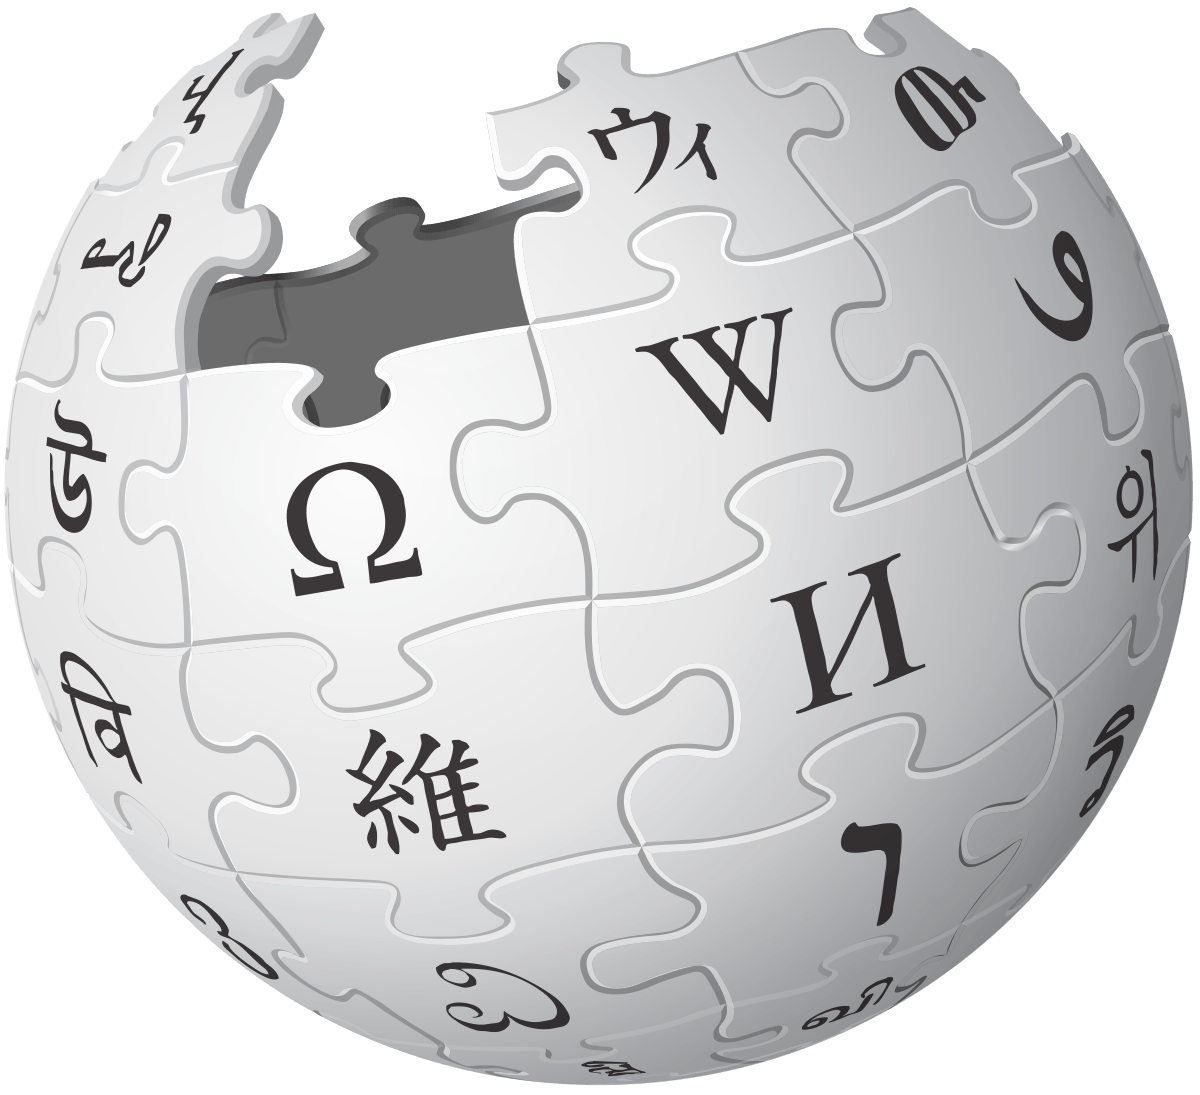 Internet Encyclopedia Logo - Wikipedia